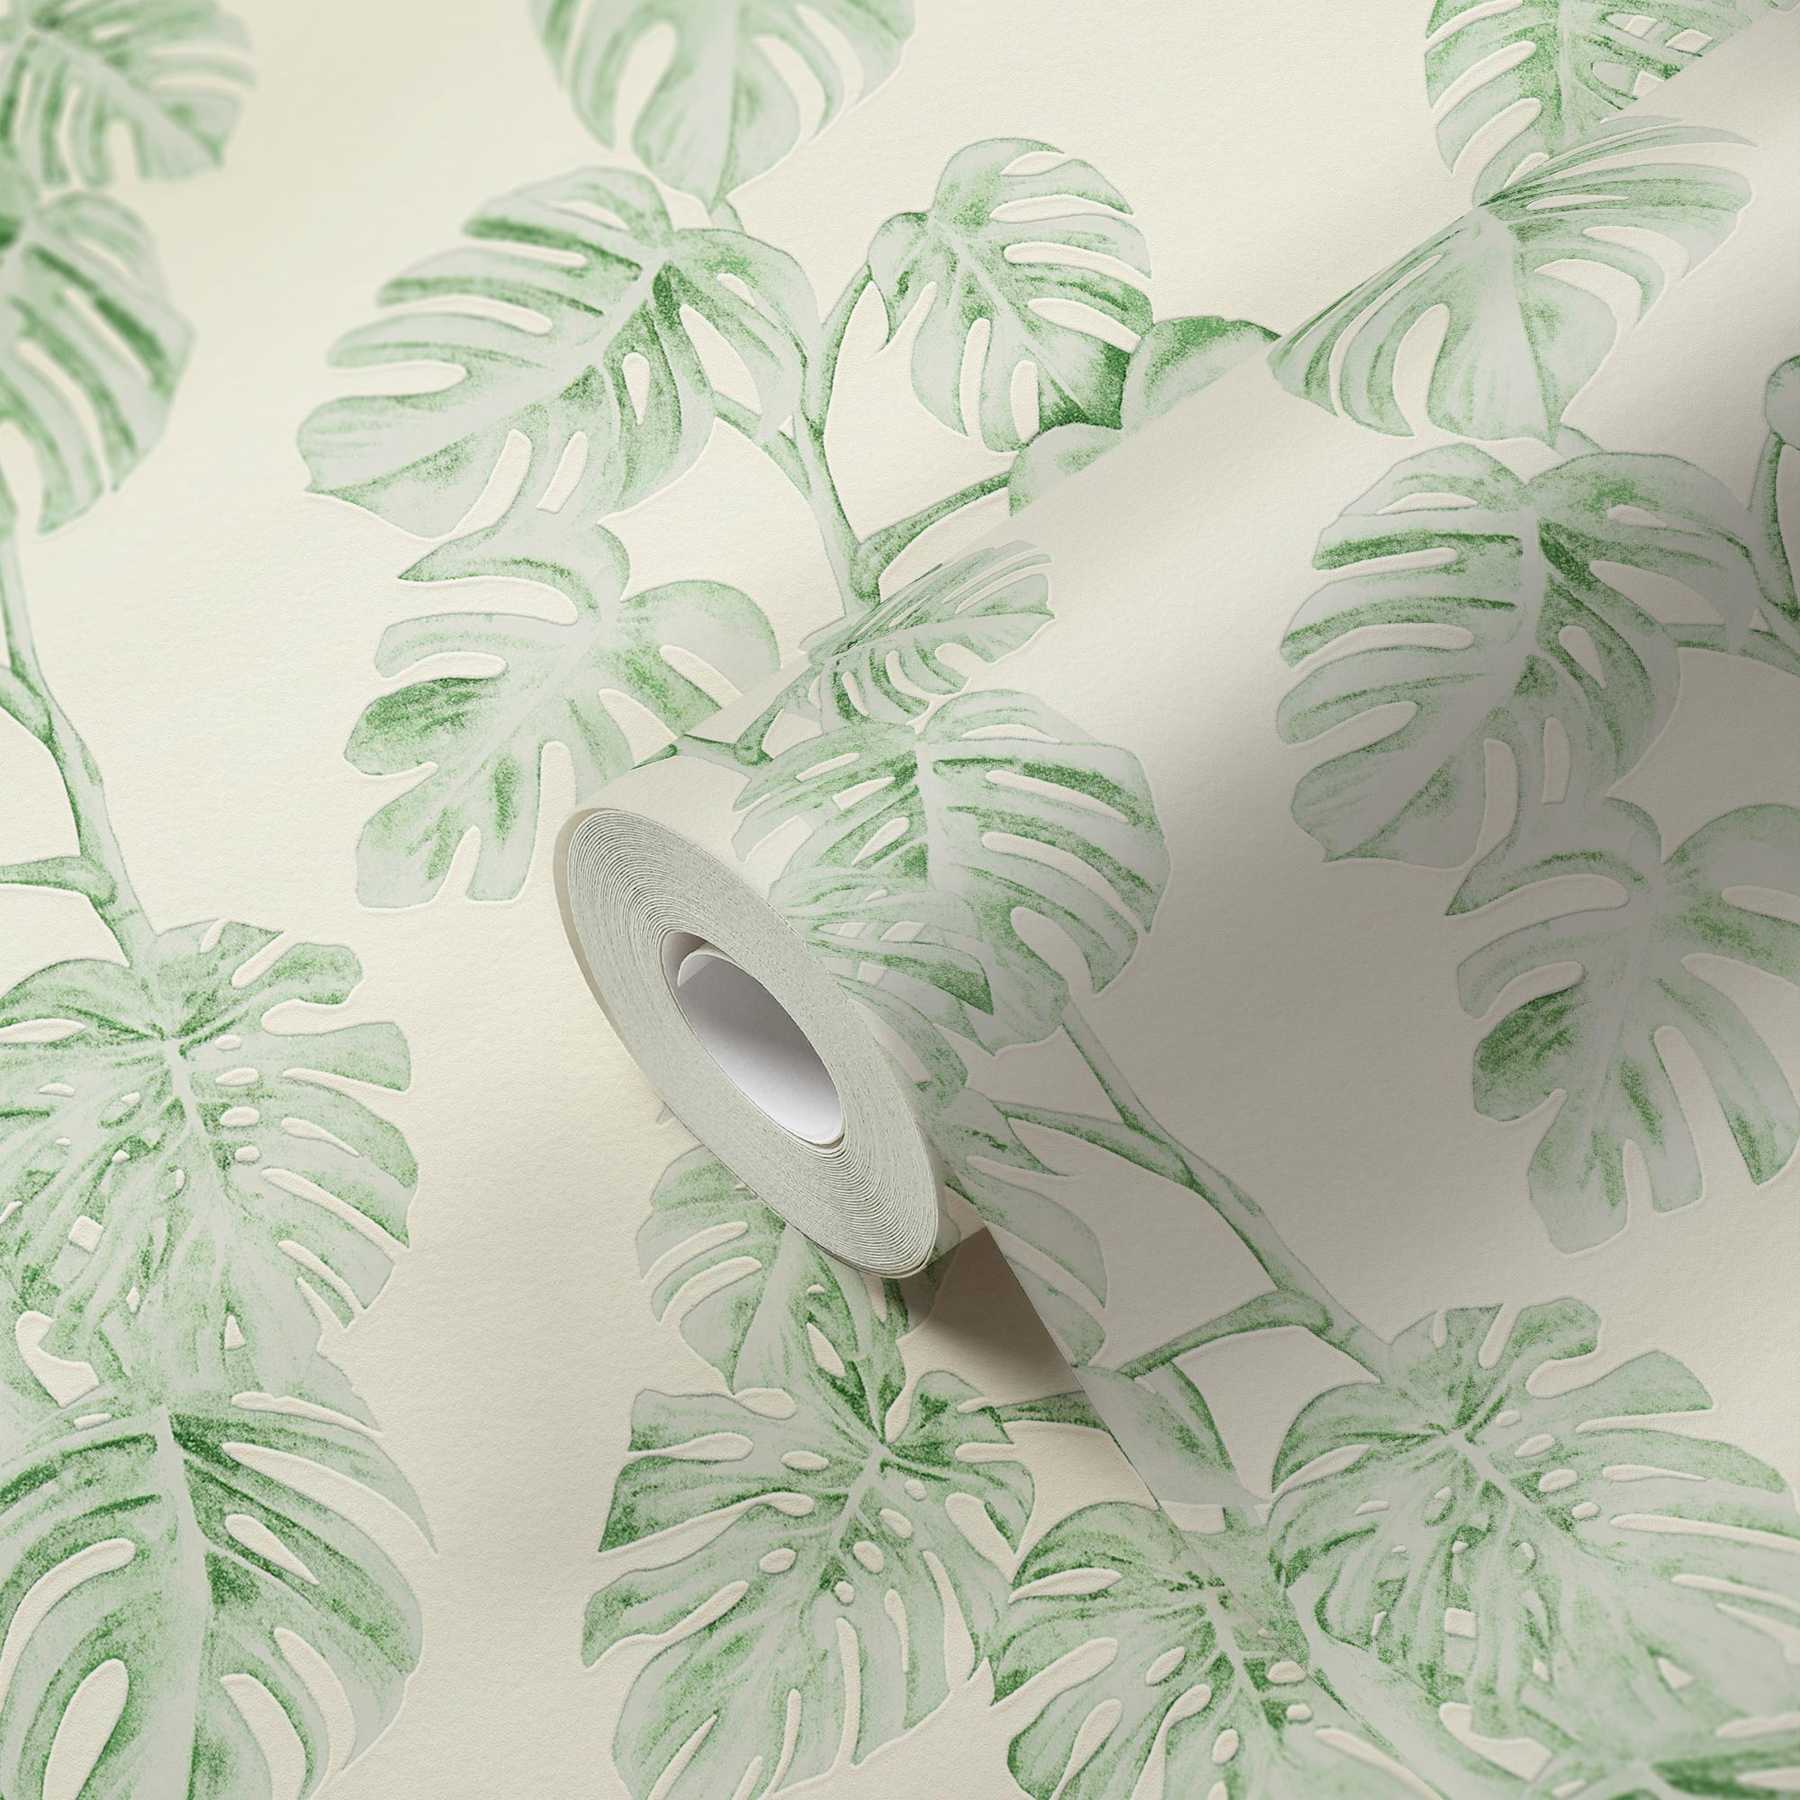             Papier peint intissé vrilles de monstera, motif naturel - vert, blanc
        